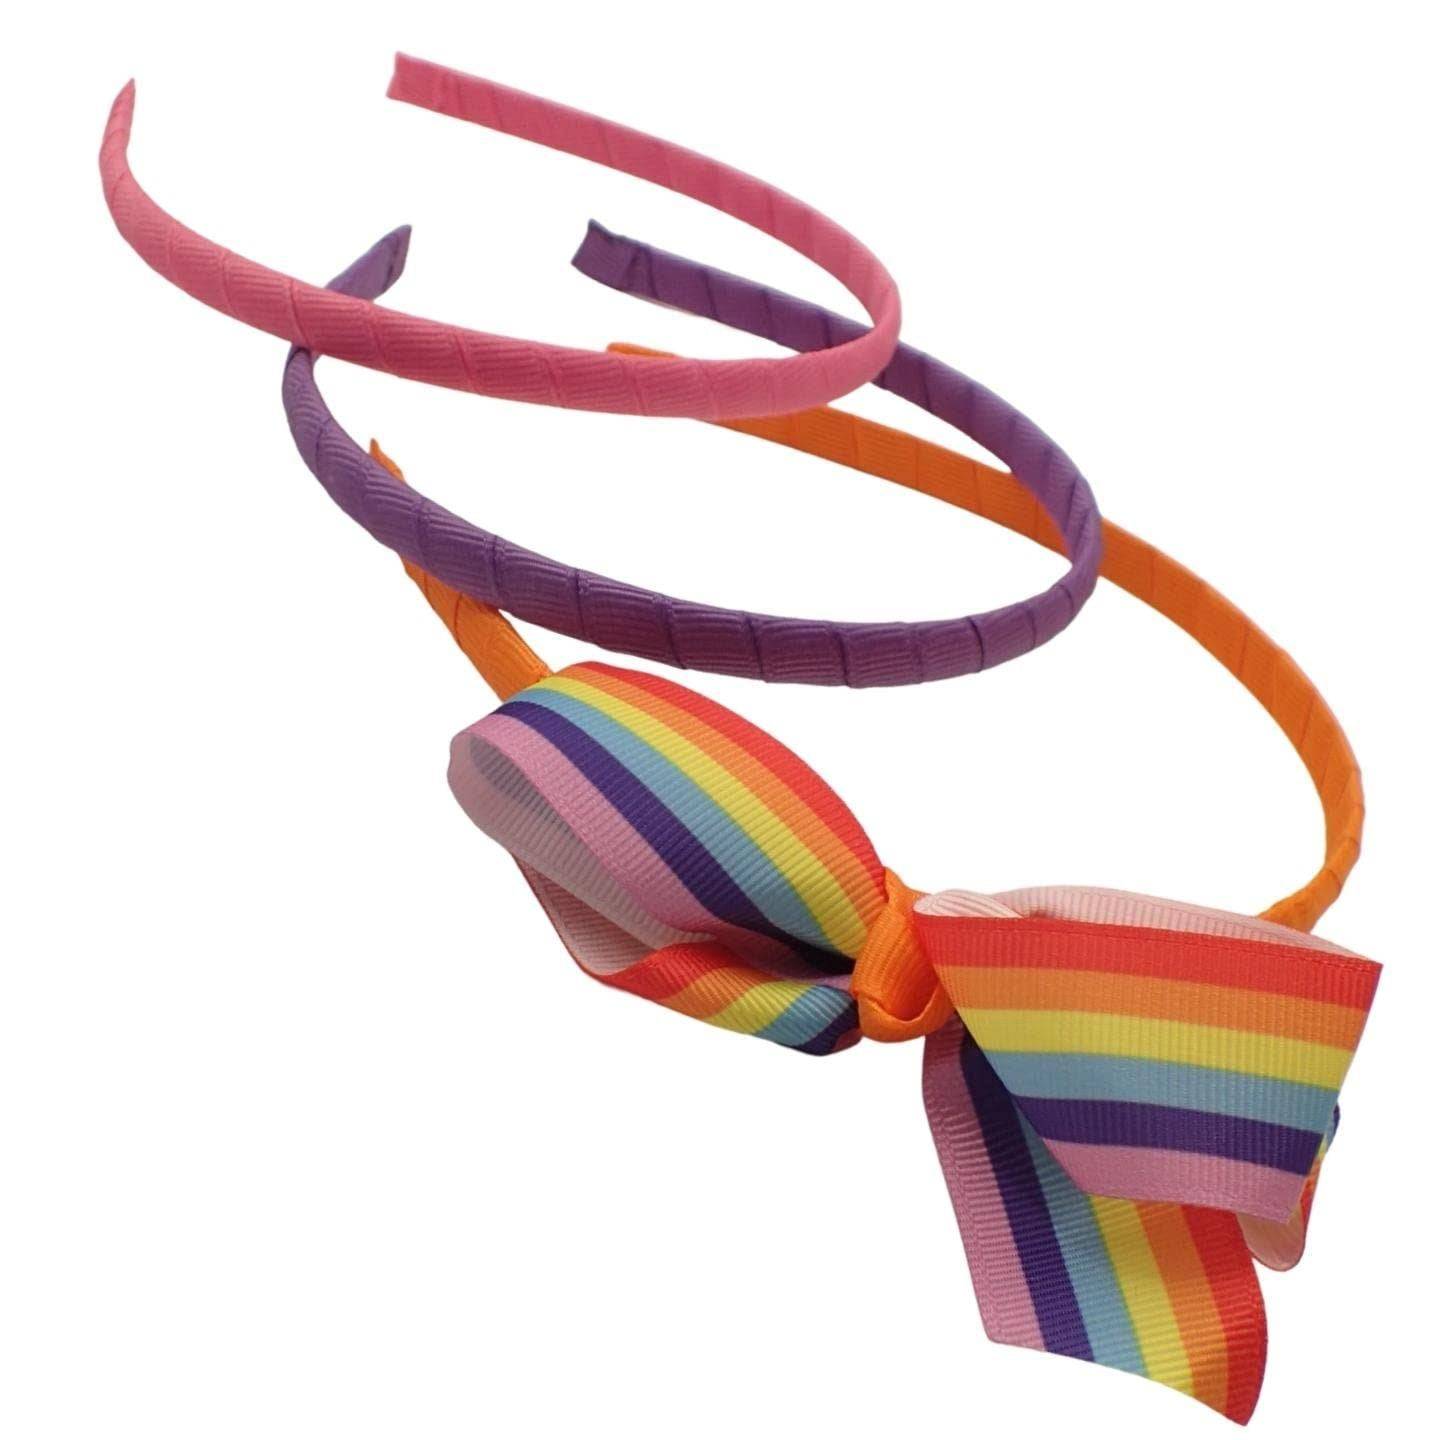 Topkids Accessories Rainbow Pride Bow Headband Set Of 3, Alice Bands For Girls & Women, Pretty Rainb